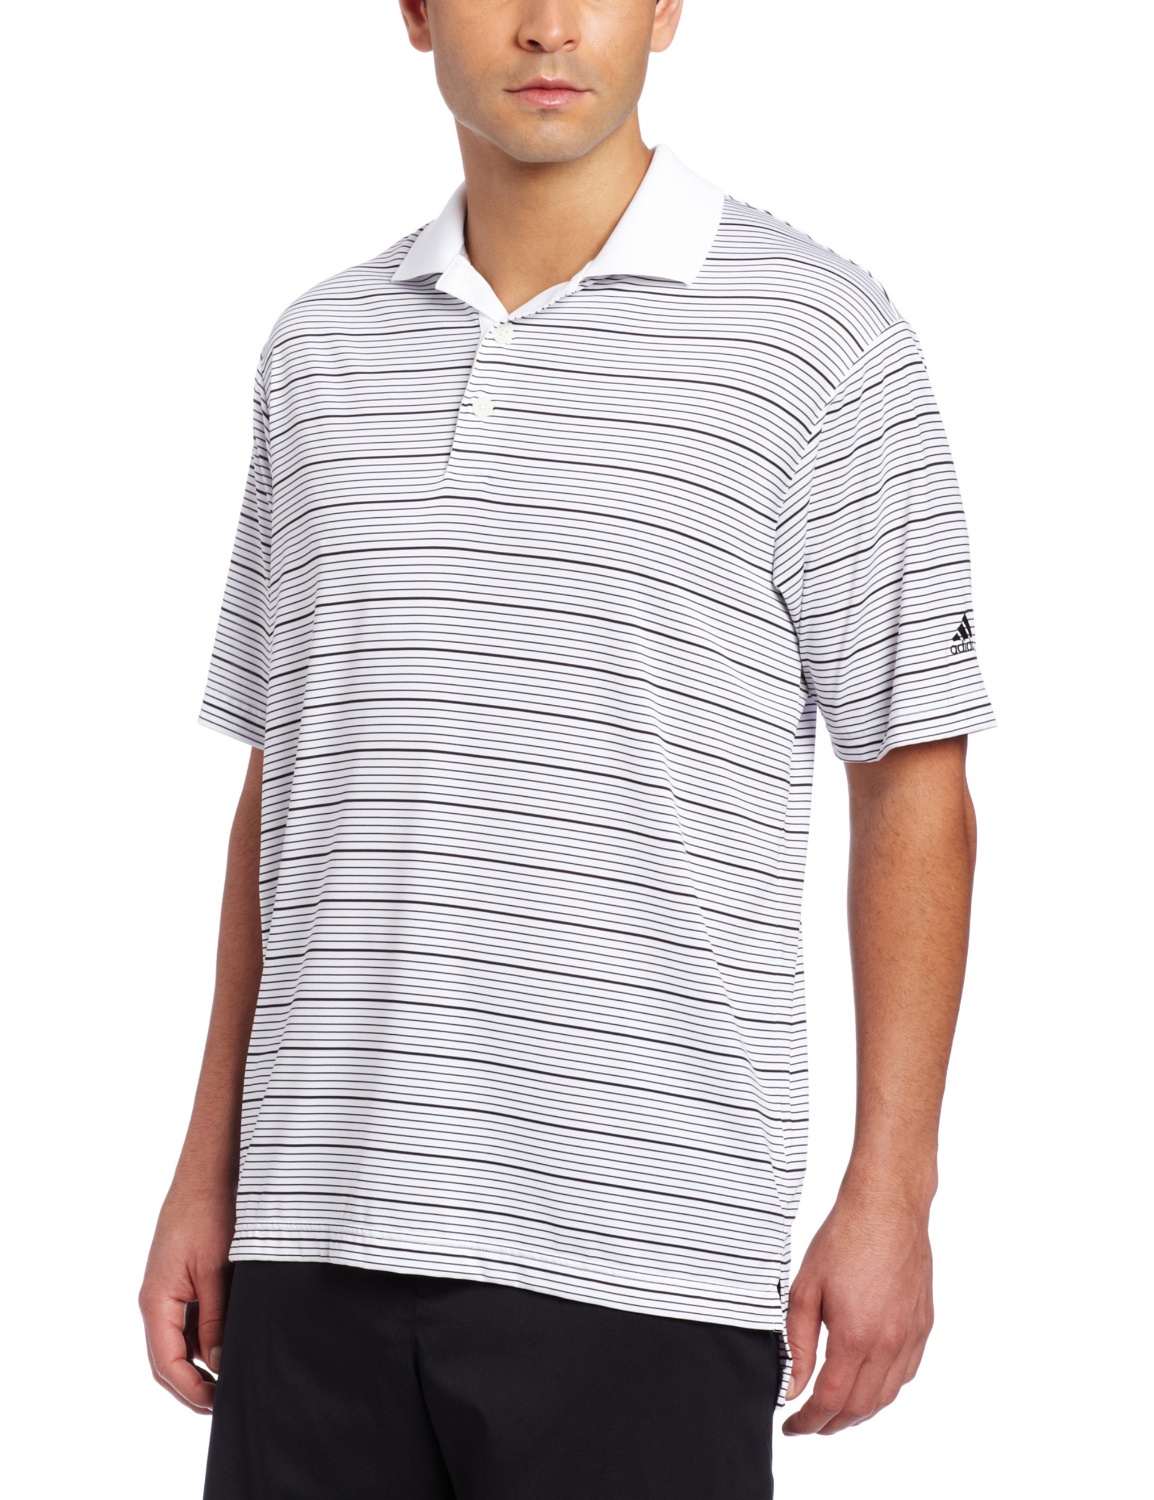 Adidas Mens Climalite Two Color Stripe Golf Shirts